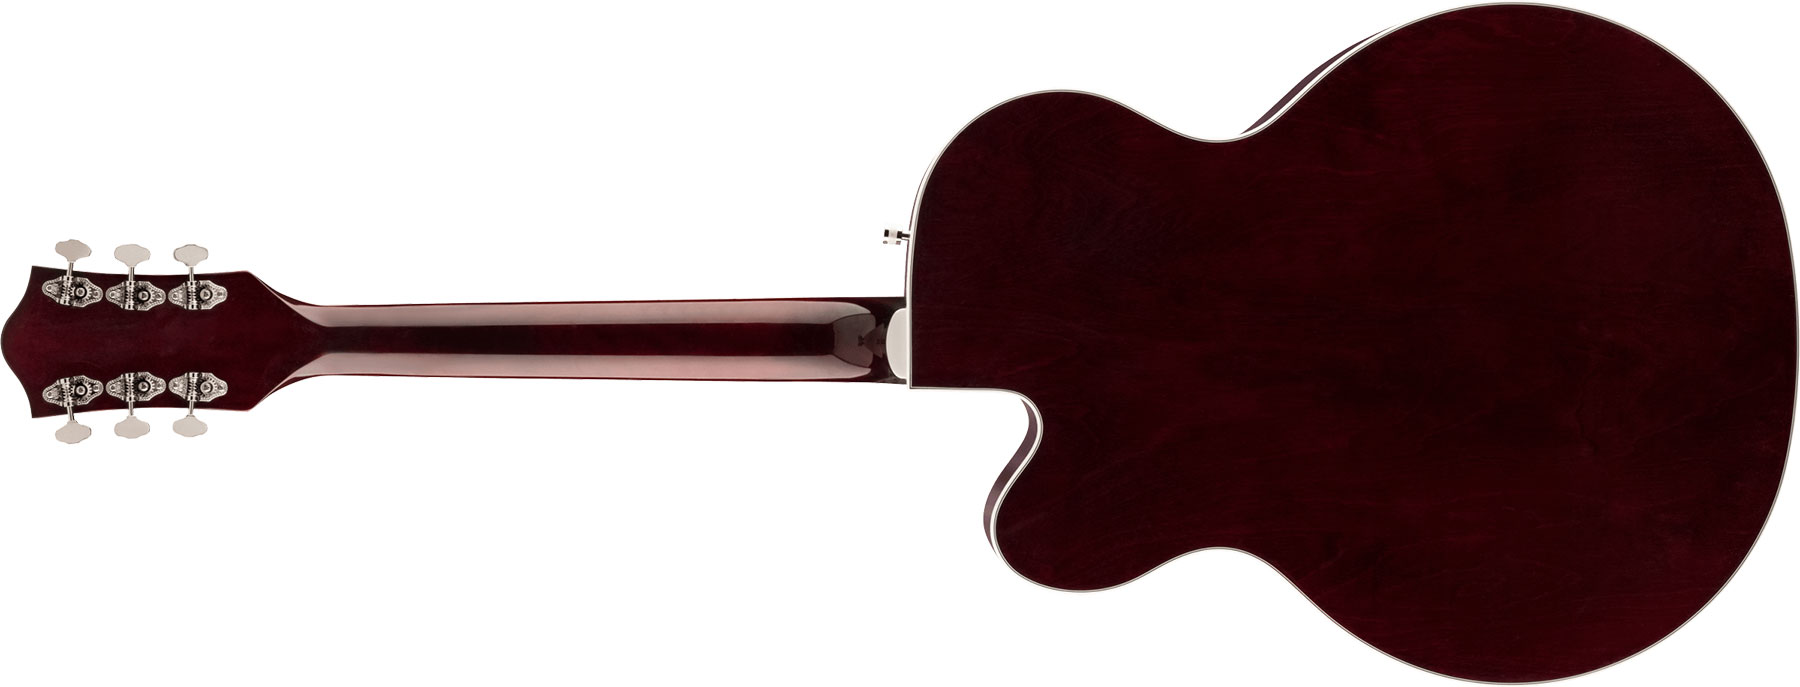 Gretsch G5420t Classic Bigsby Electromatic Hollow Body 2h Trem Lau - Walnut Stain - Semi-hollow electric guitar - Variation 1